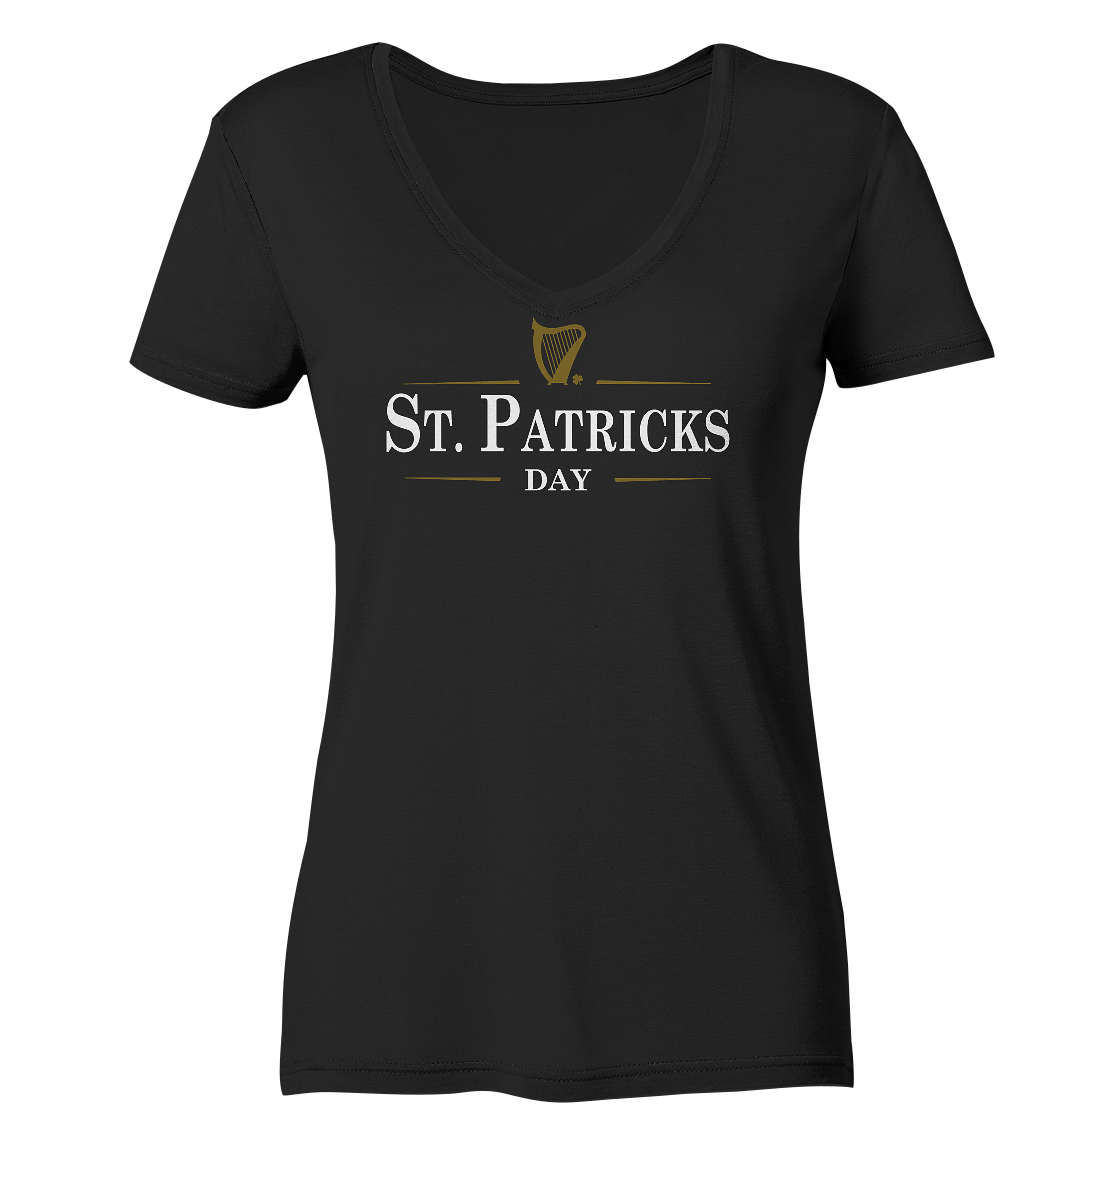 St. Patricks Day "Stout" - Ladies V-Neck Shirt